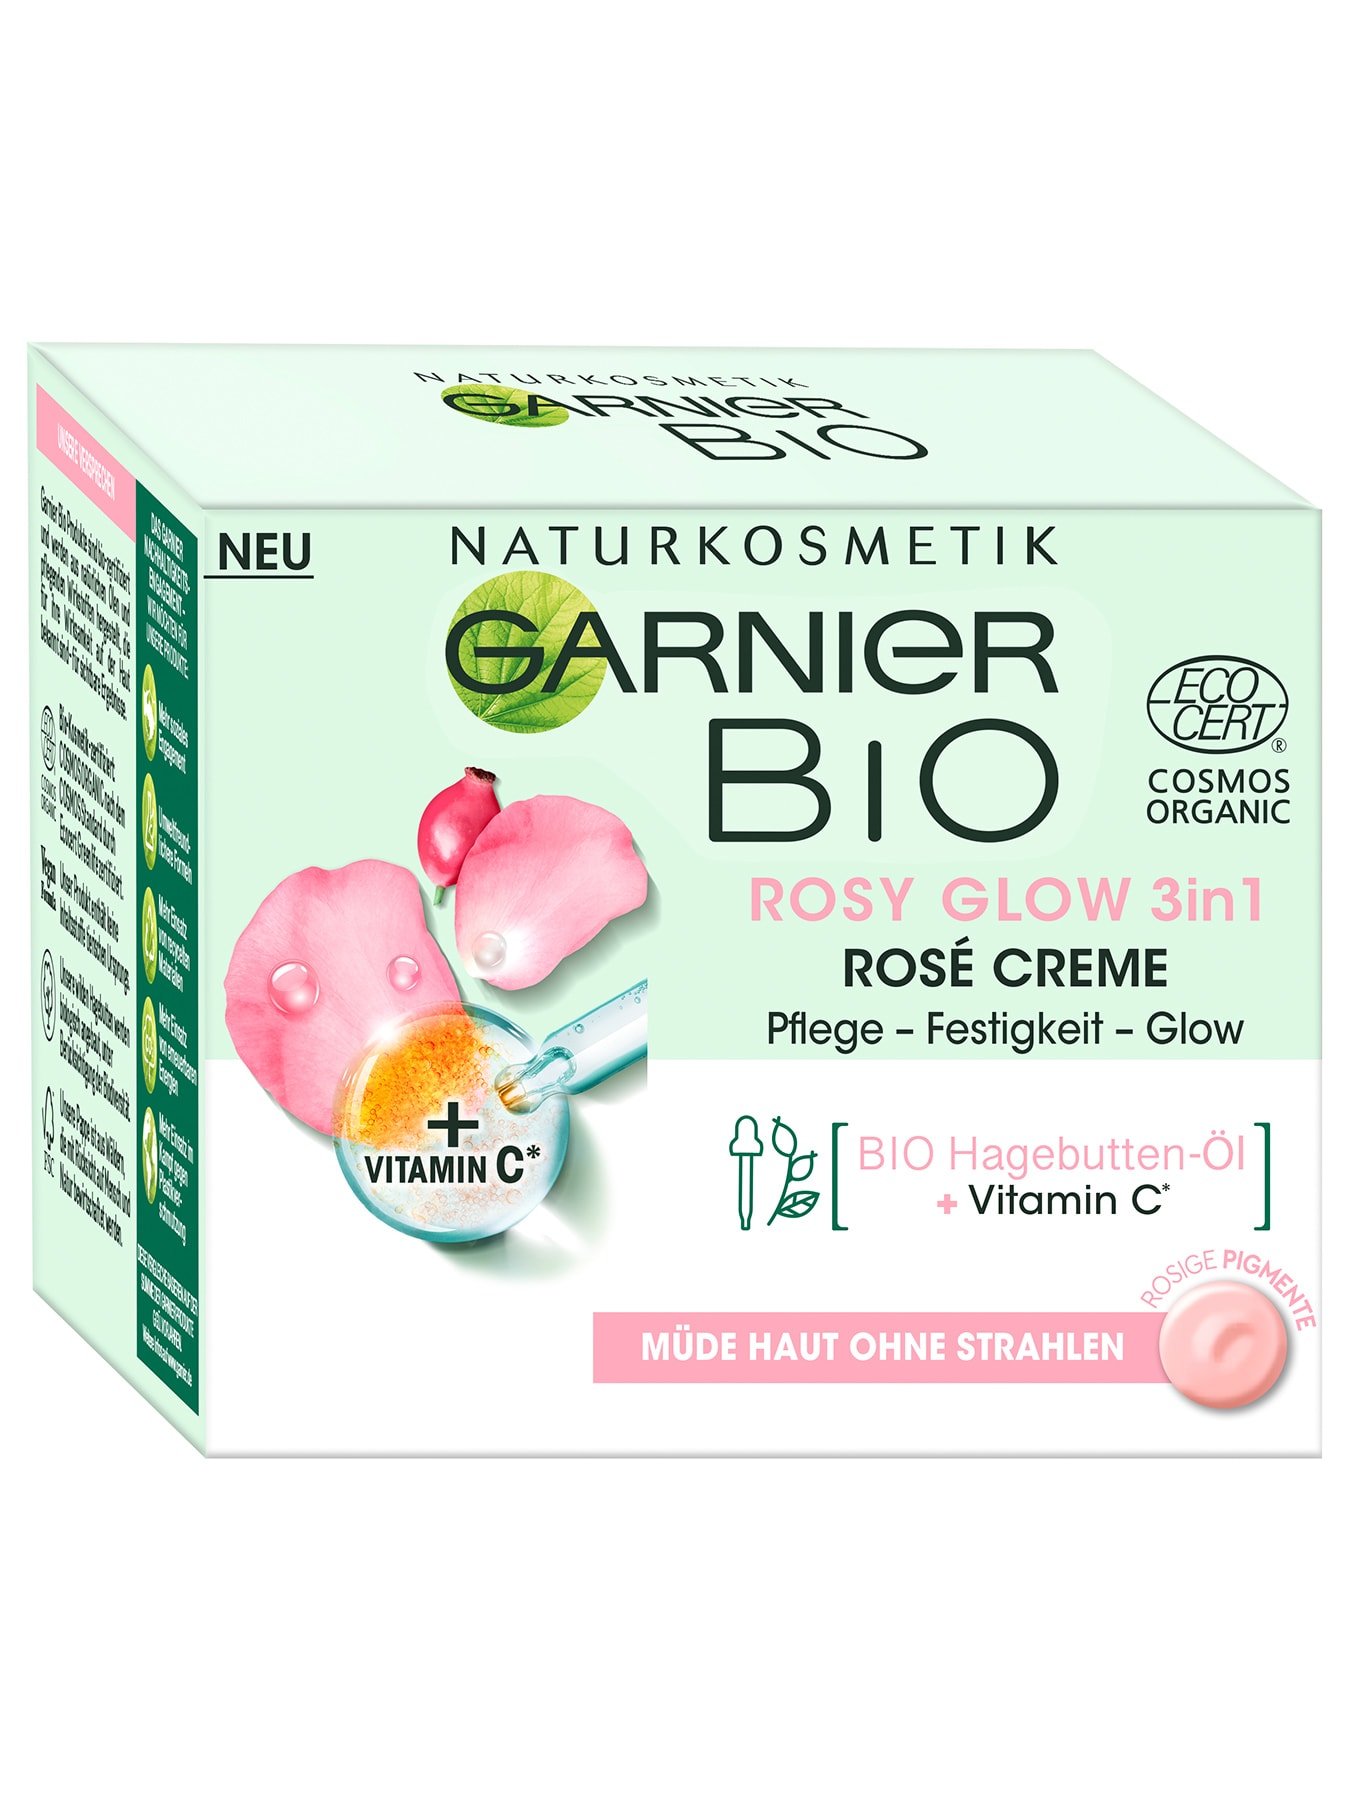 Garnier Bio Rosy Glow 3in1 Rose Creme - Abbildung Verpackung